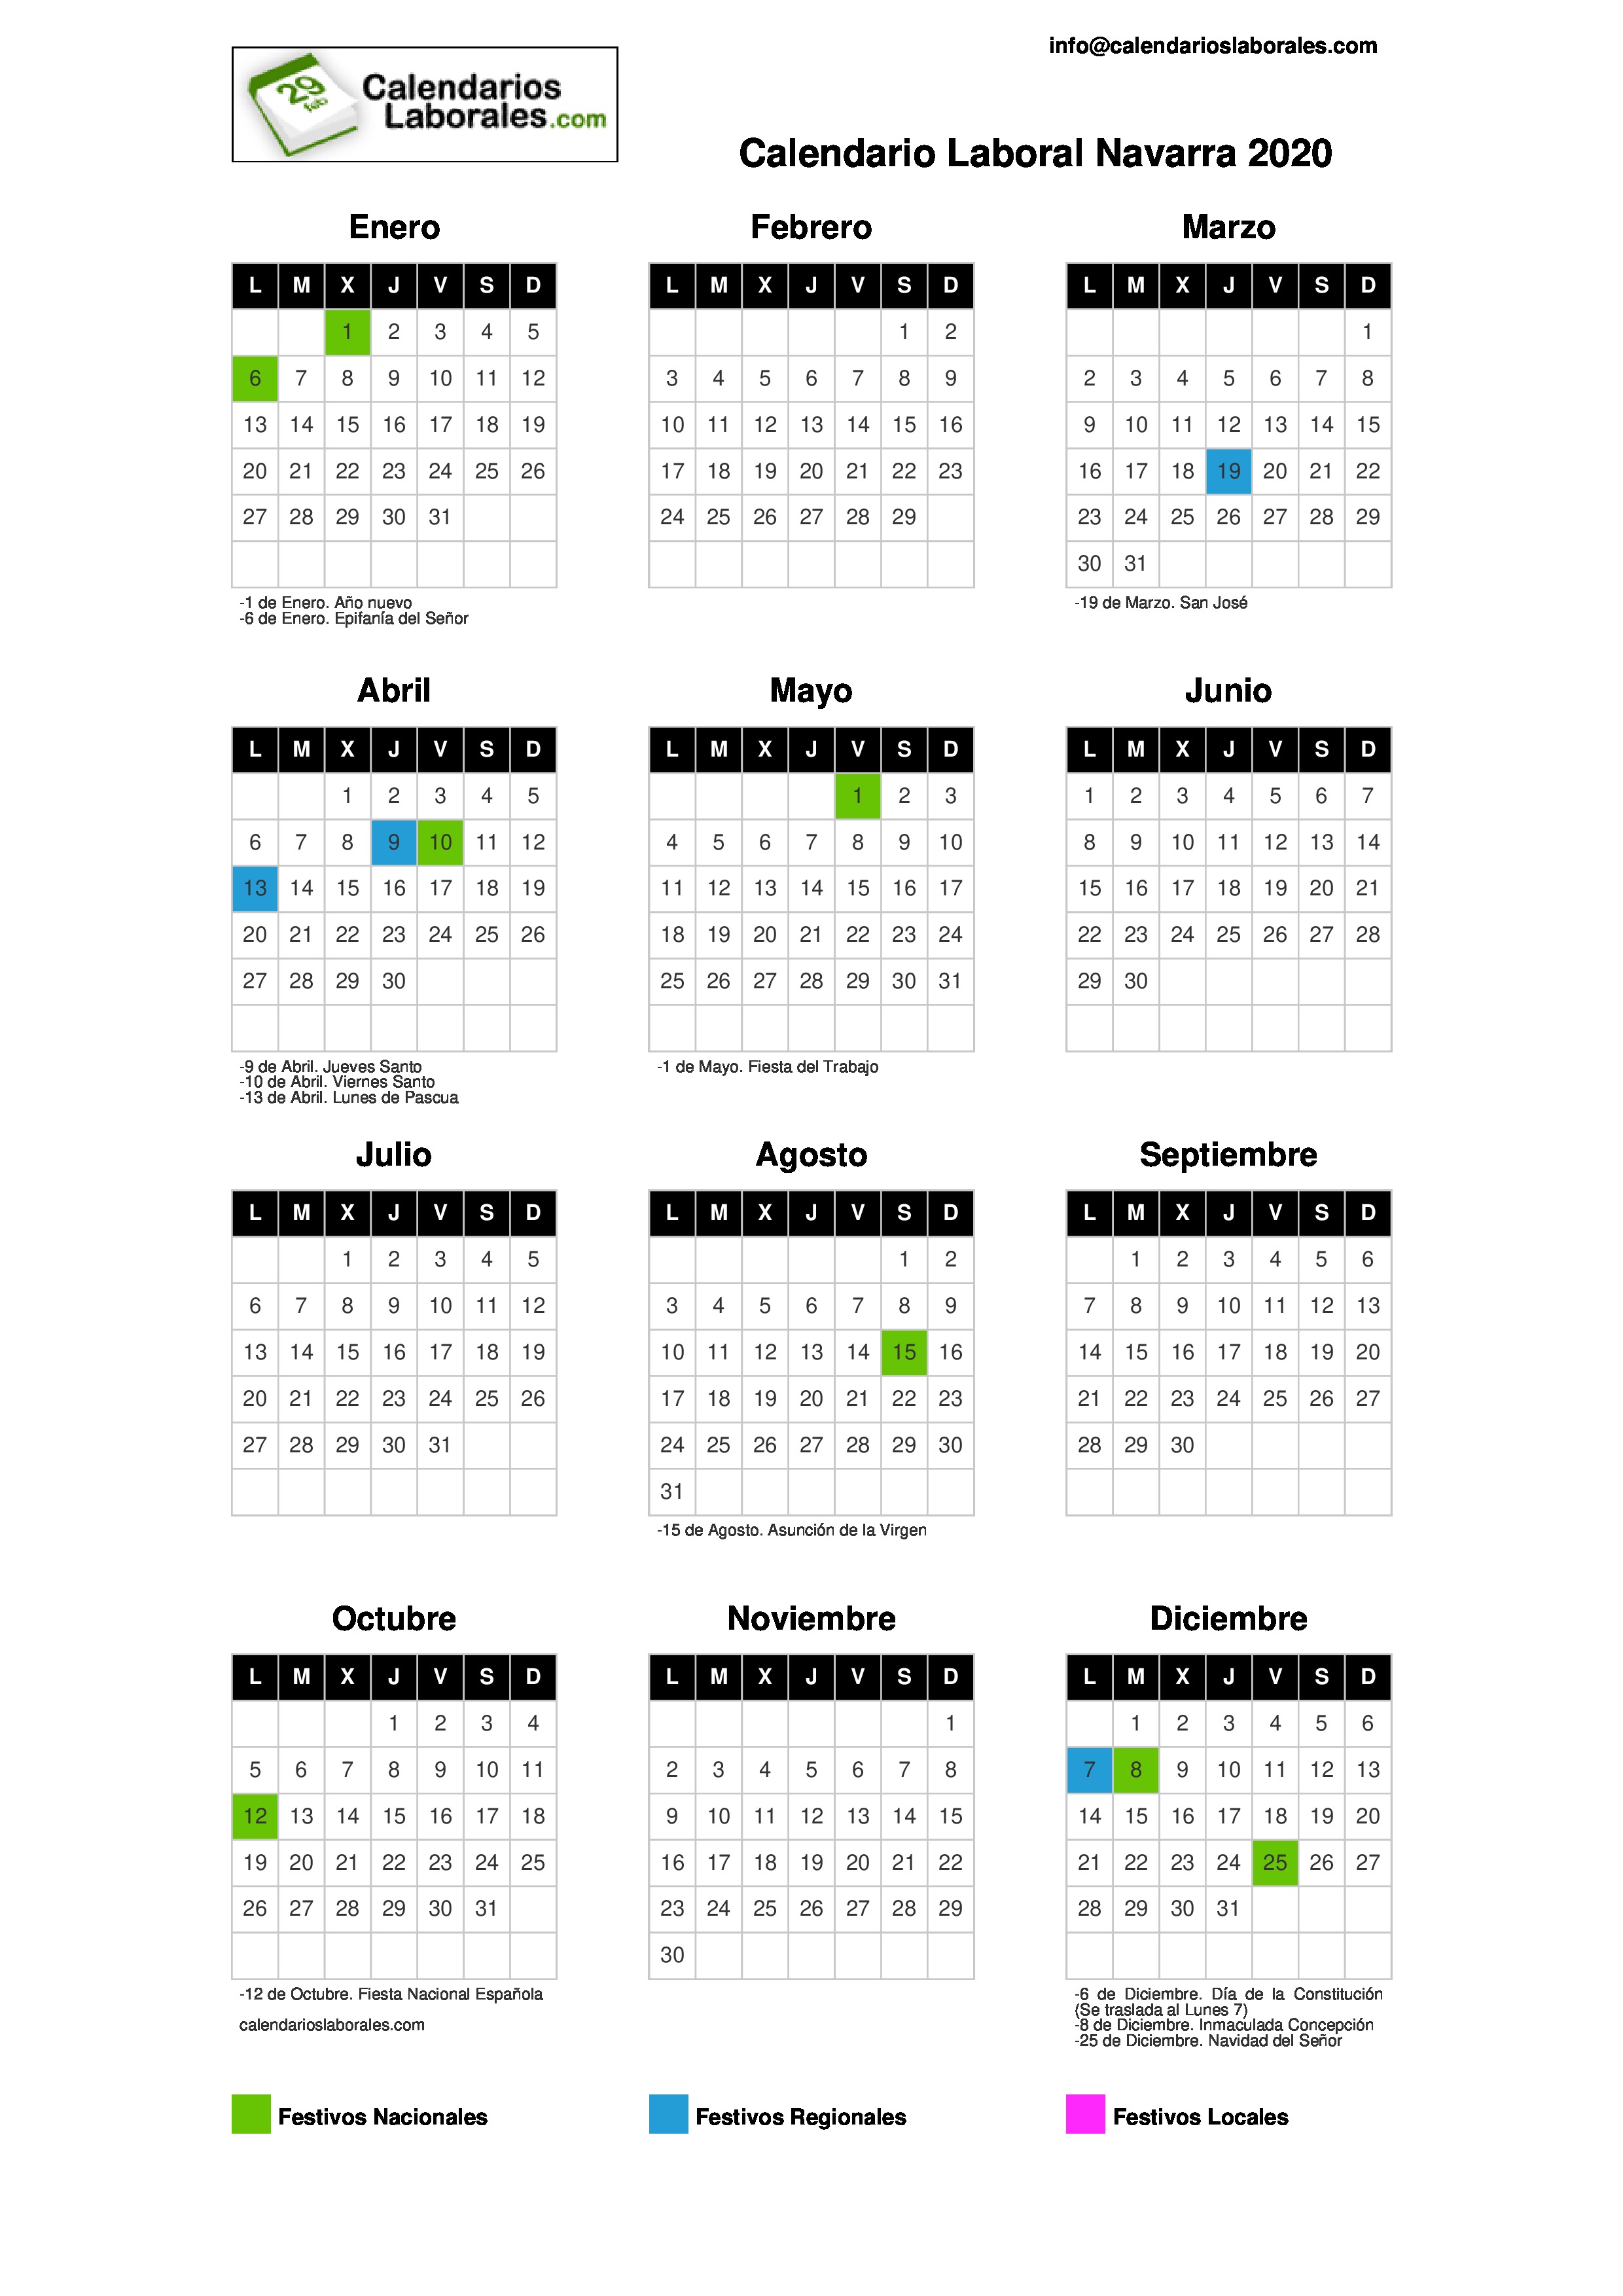 Calendario Laboral Navarra 2020